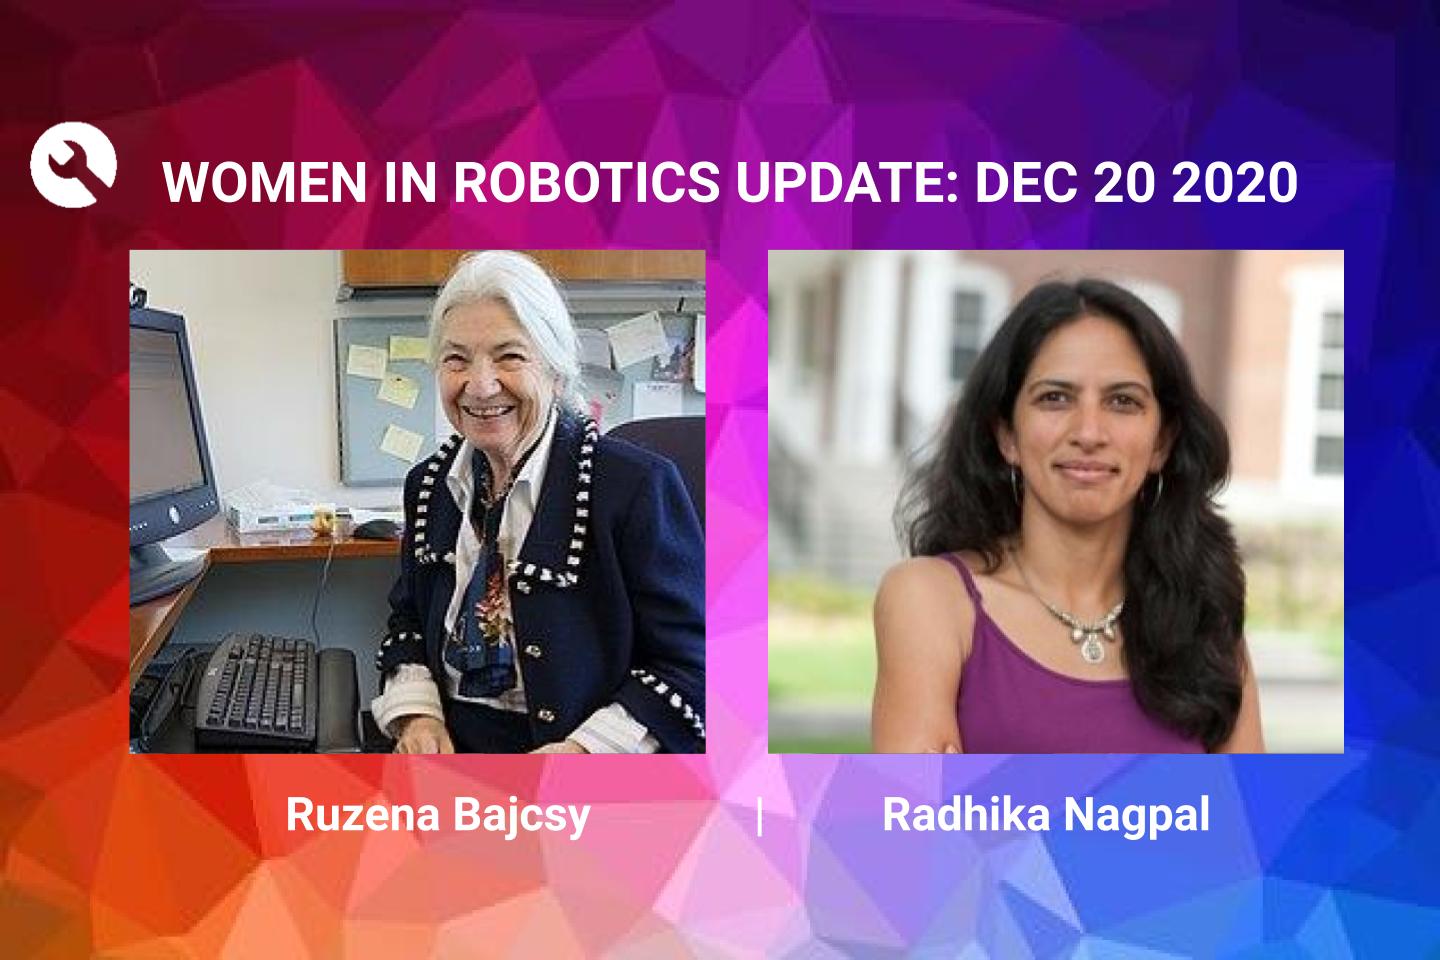 Women in Robotics Update: Ruzena Bajcsy and Radhika Nagpal